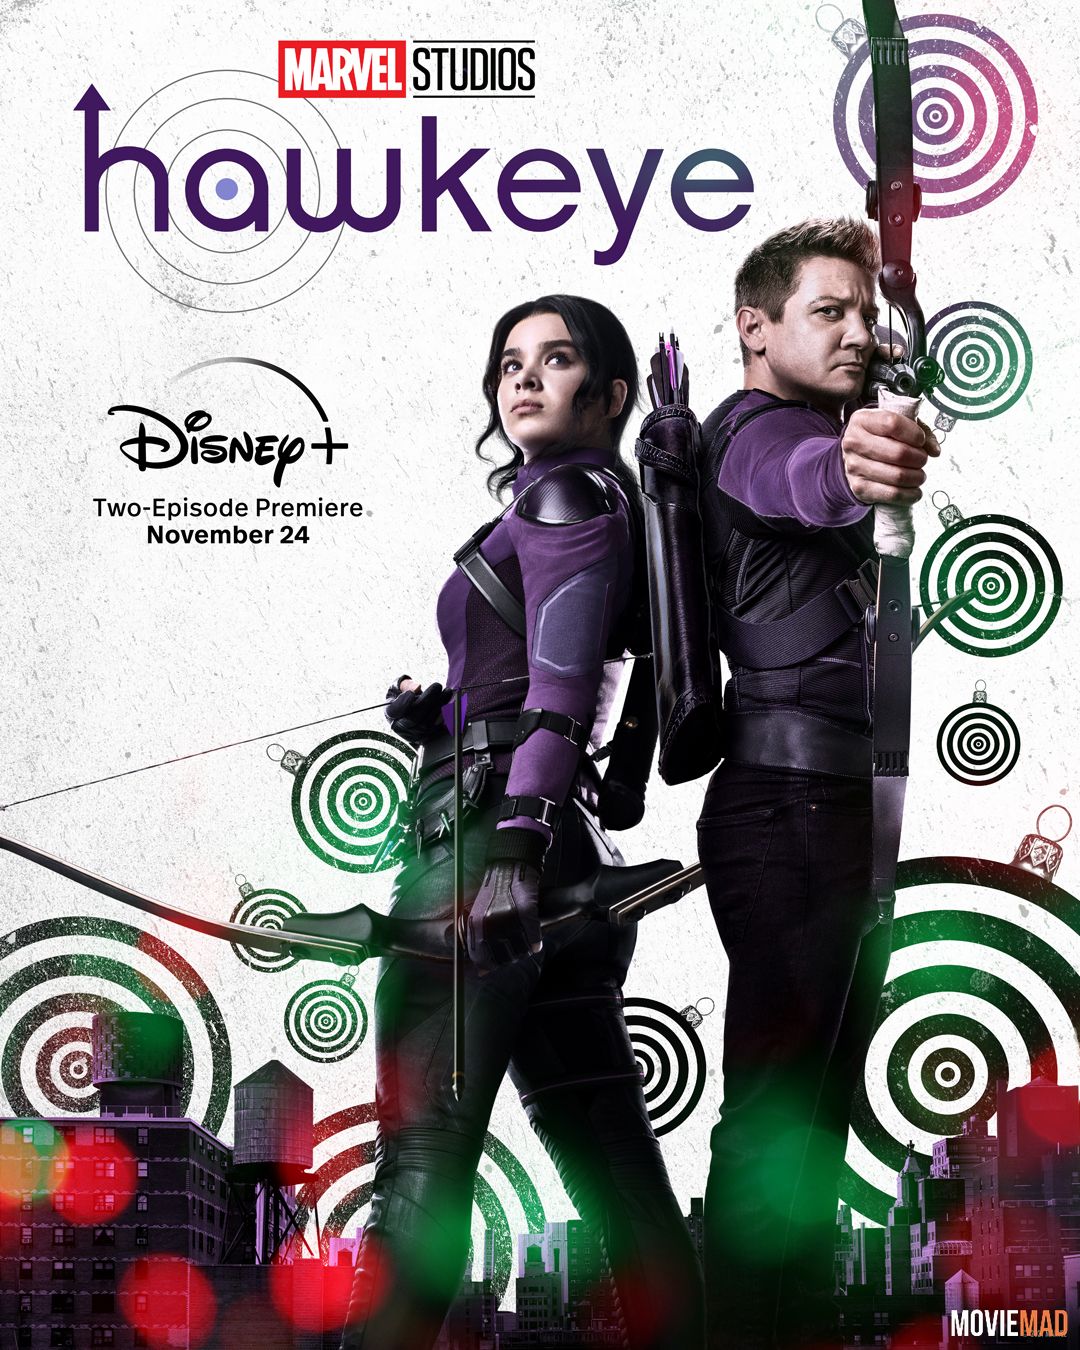 Hawkeye S01E06 (2021) Hindi Dubbed Complete DSPN Series HDRip 1080p 720p 480p